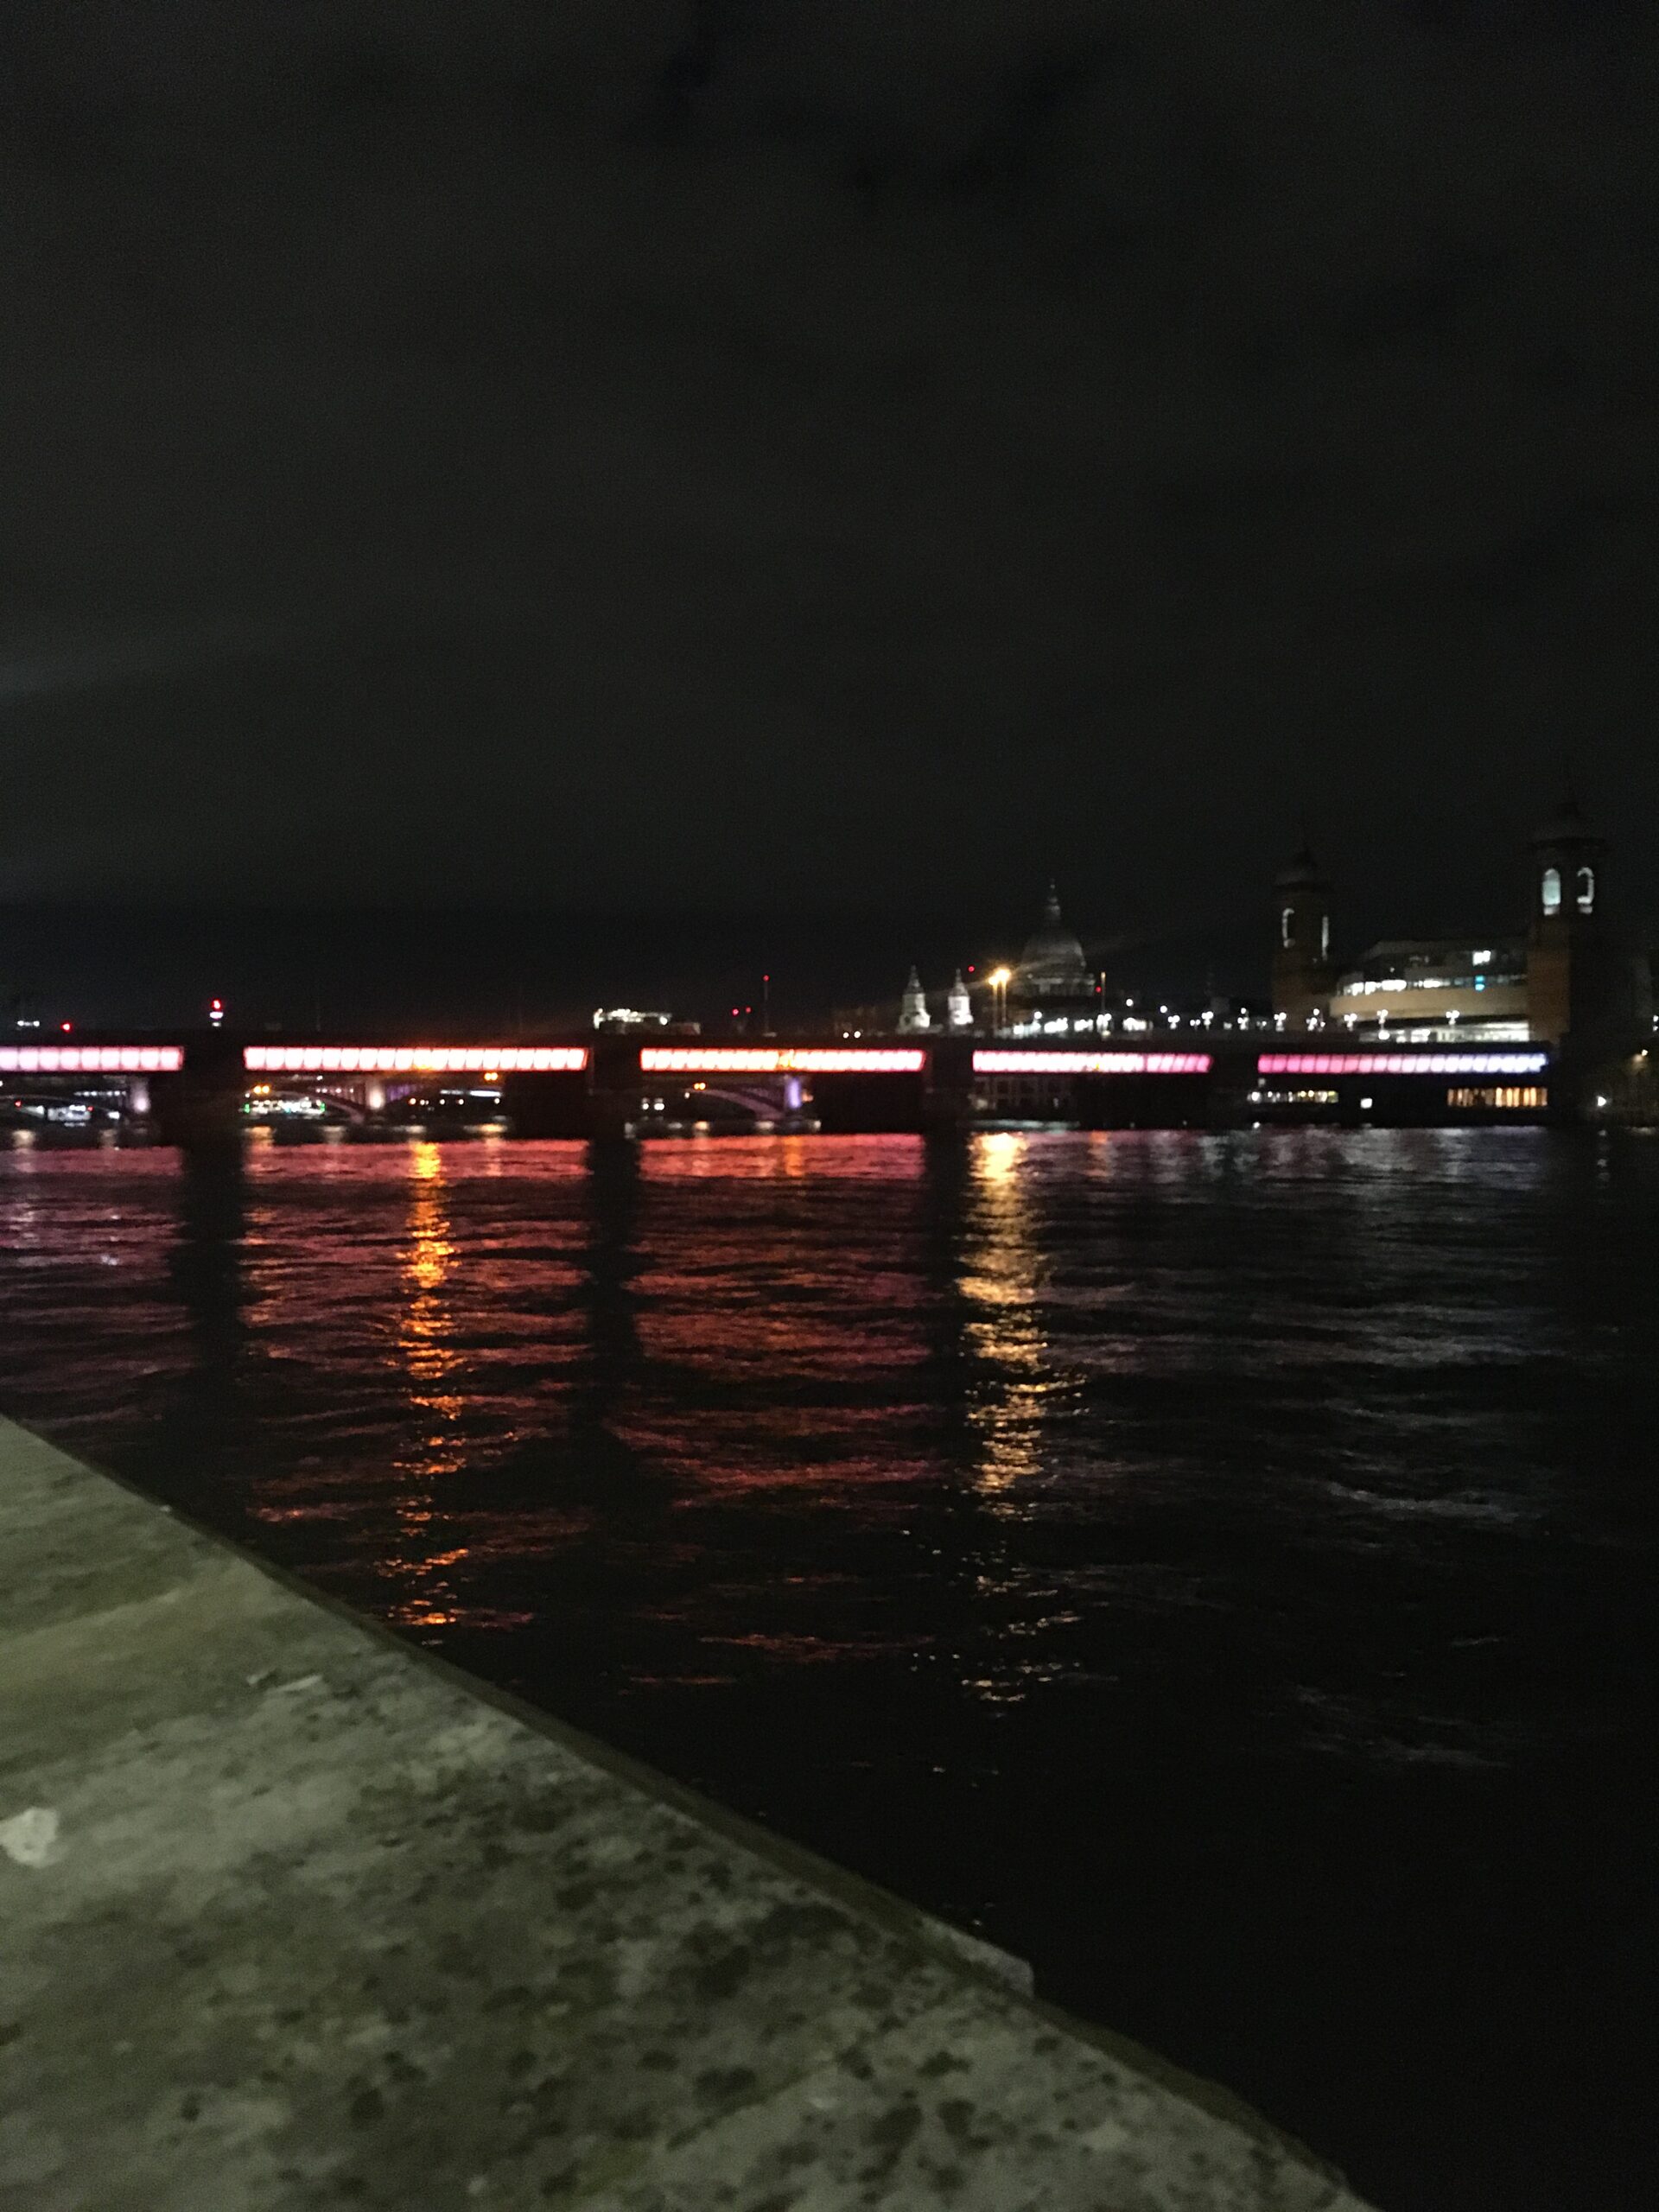 Late night looking at Southwark Bridge.